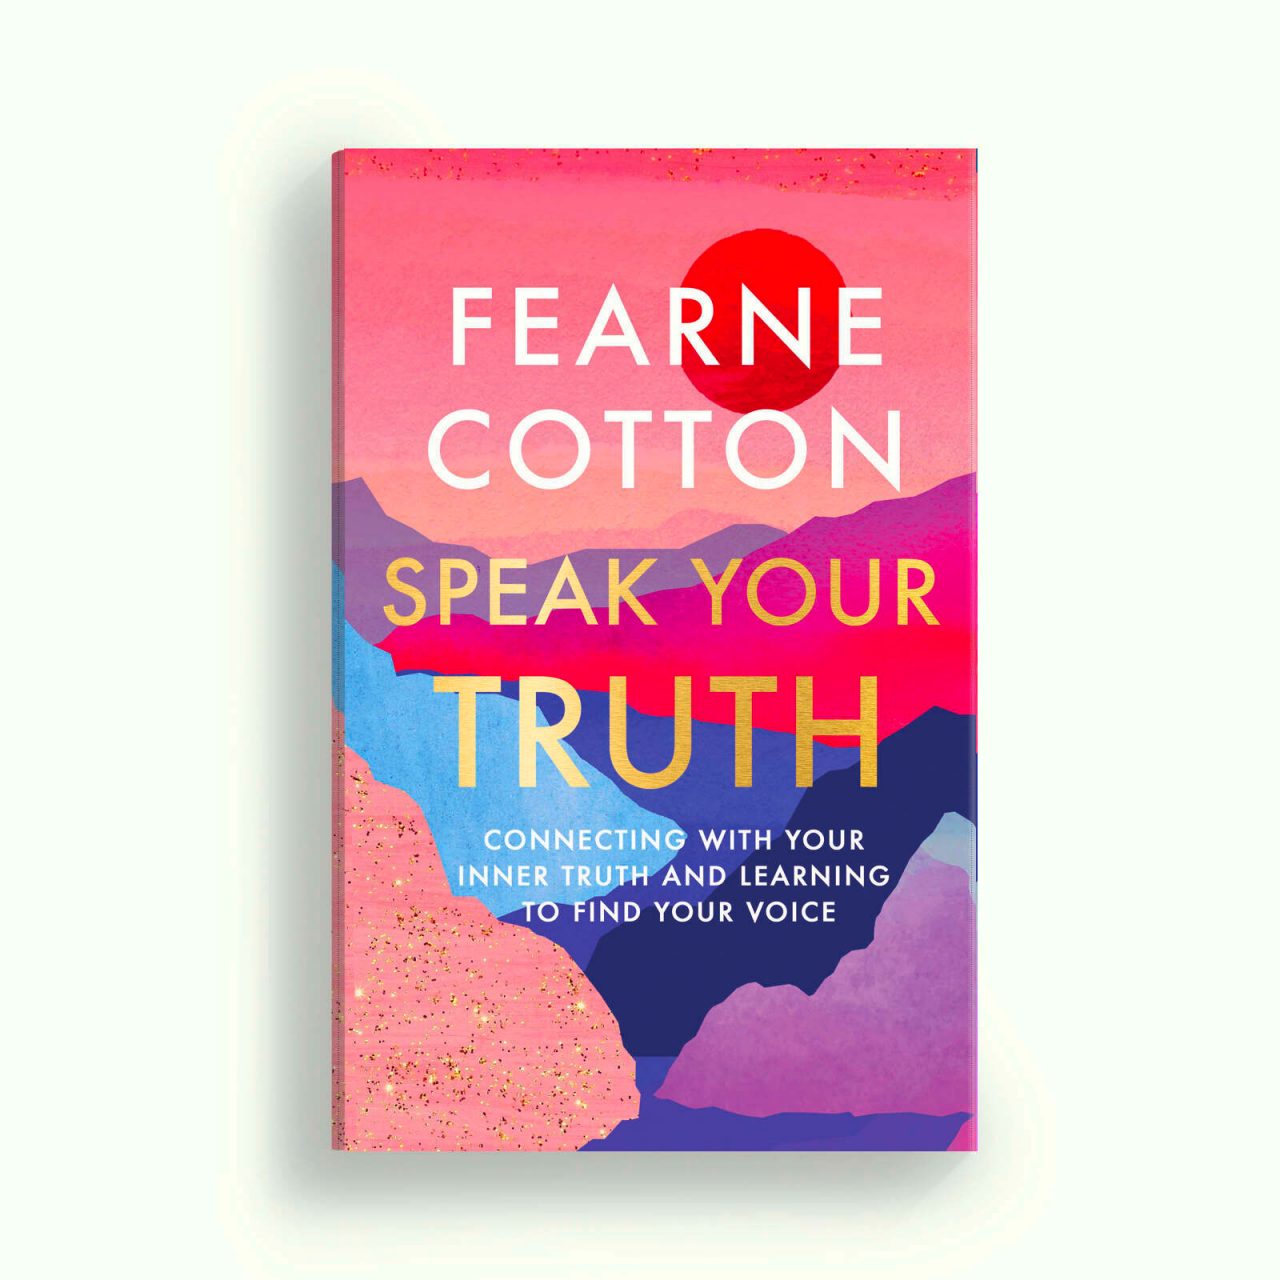 Fearne Cotton's book